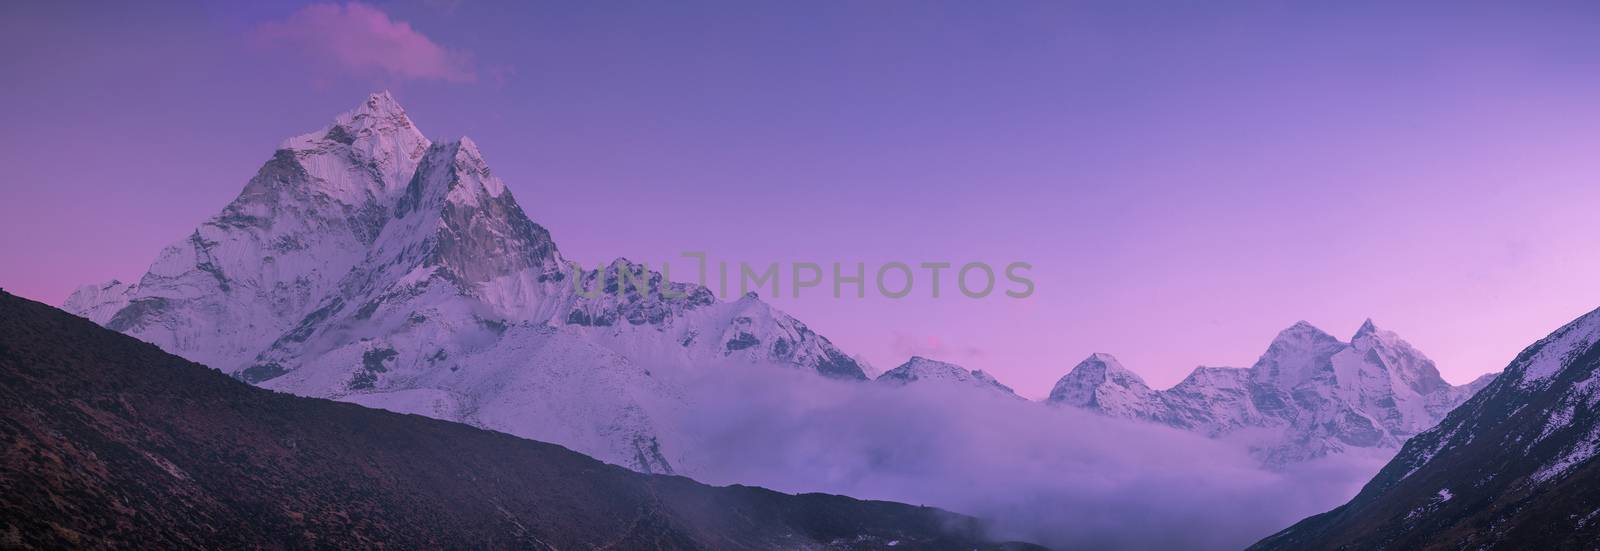 Ama Dablam peak and purple sunset in Himalayas by Arsgera